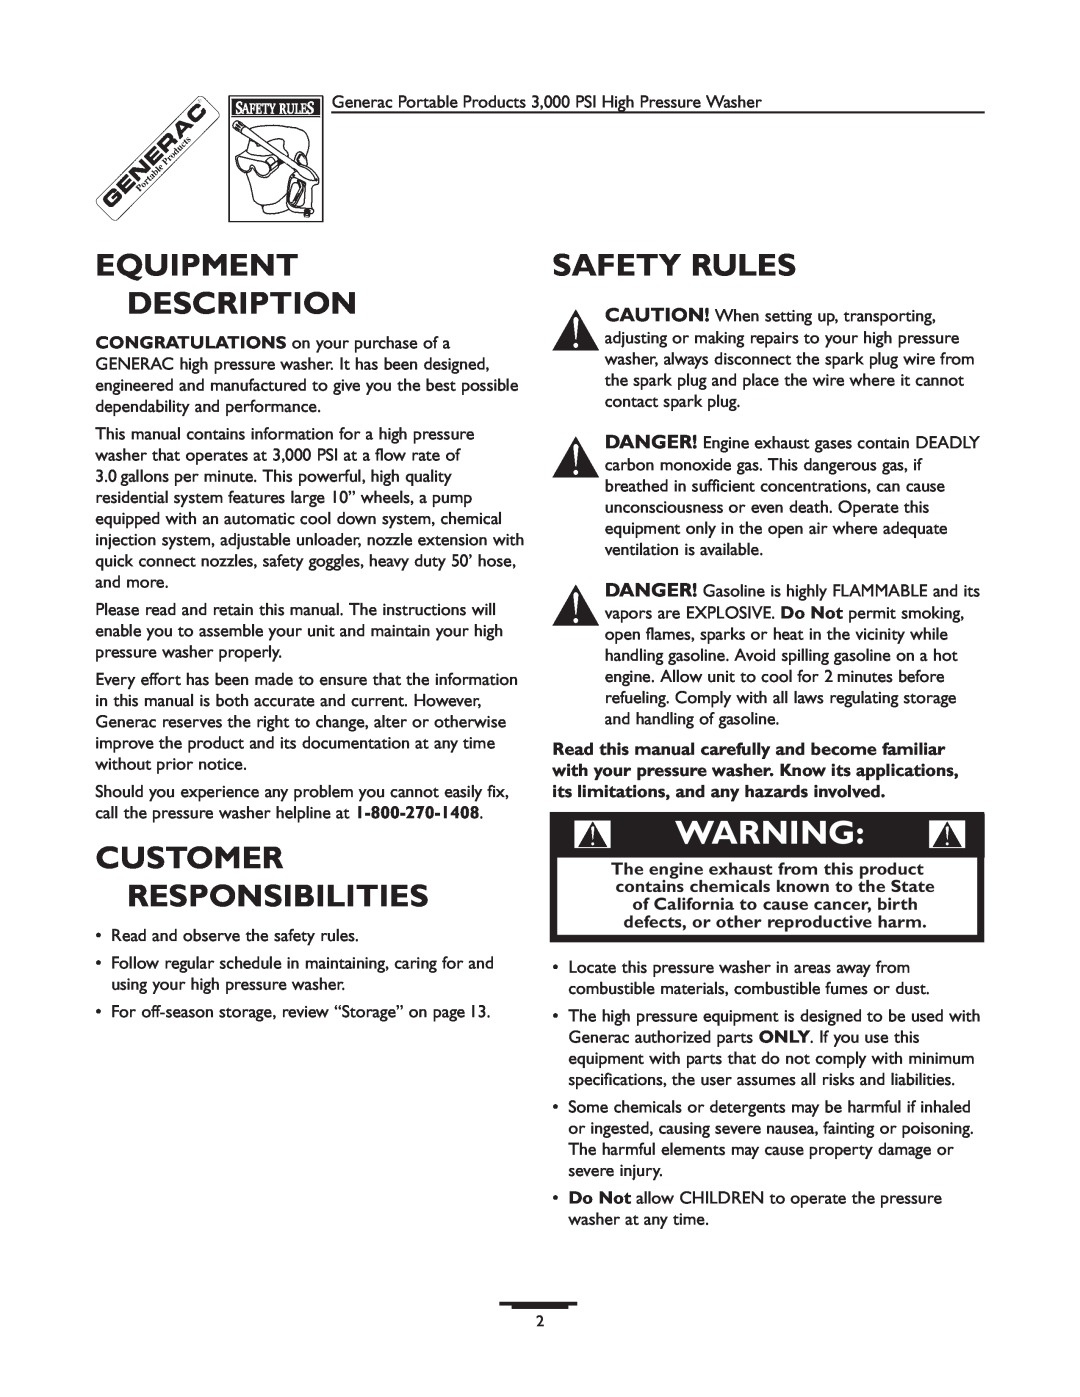 Generac 1418-0 manual Equipment Description, Customer Responsibilities, Safety Rules 